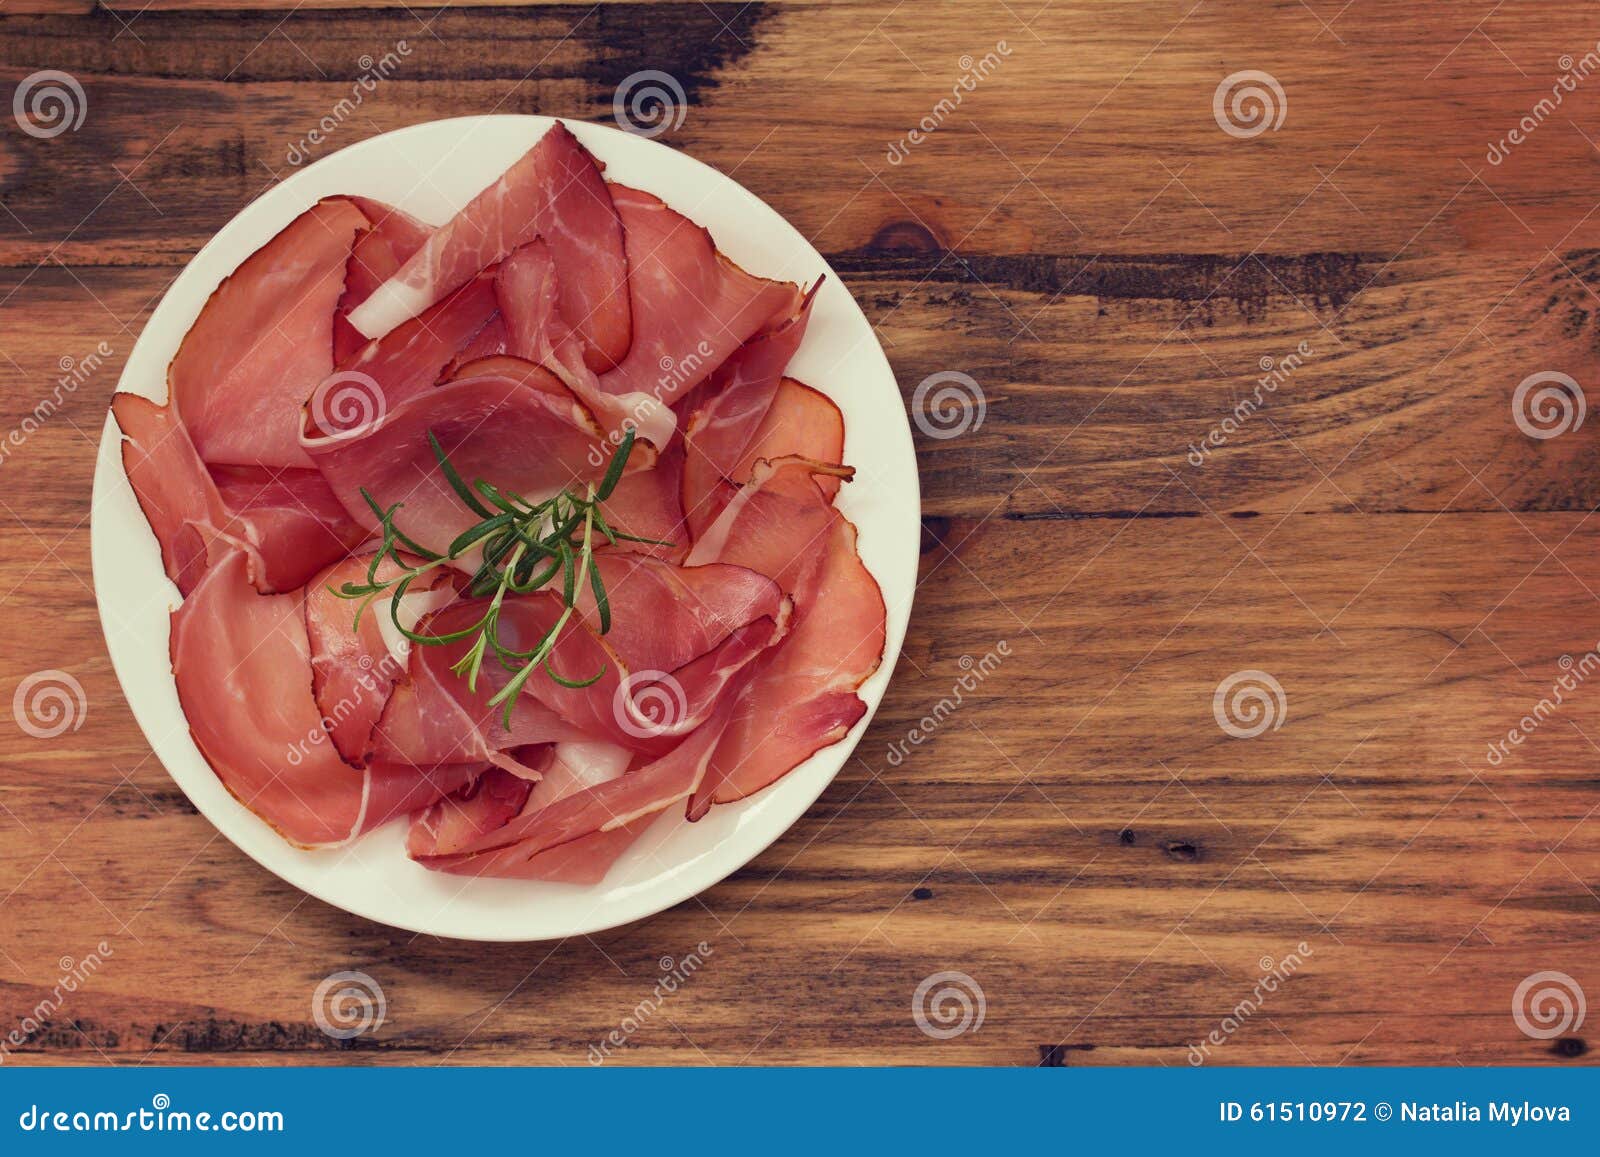 Prosciutto on white plate stock photo. Image of jamon - 61510972